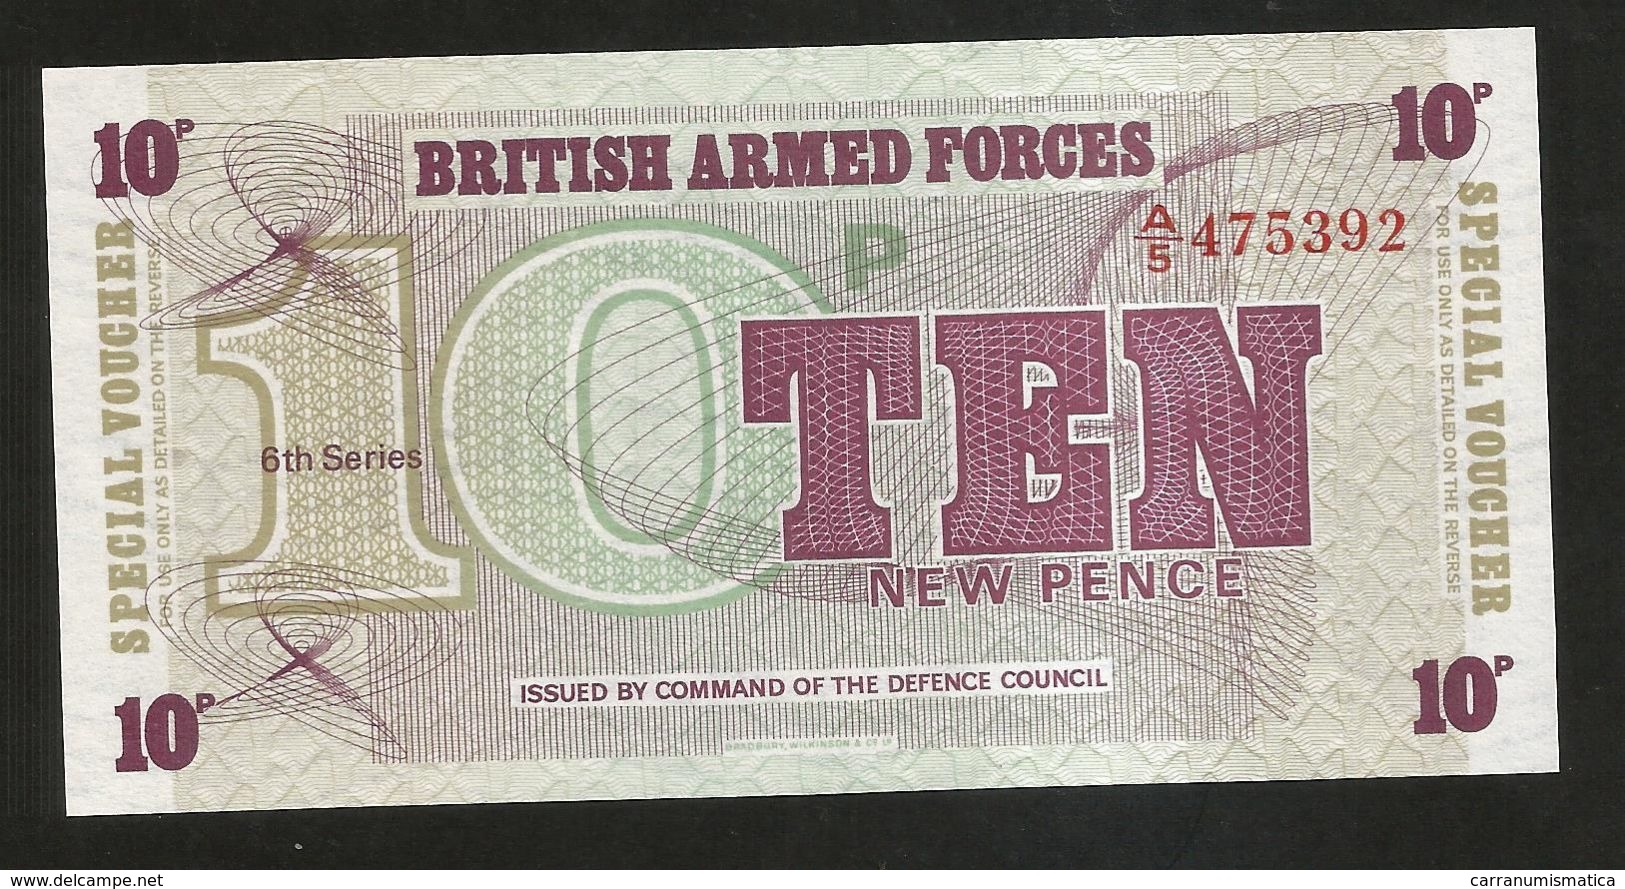 BRITISH ARMED FORCES - SPECIAL VOUCHER - 10 PENCE - 6th SERIES - Forze Armate Britanniche & Docuementi Speciali